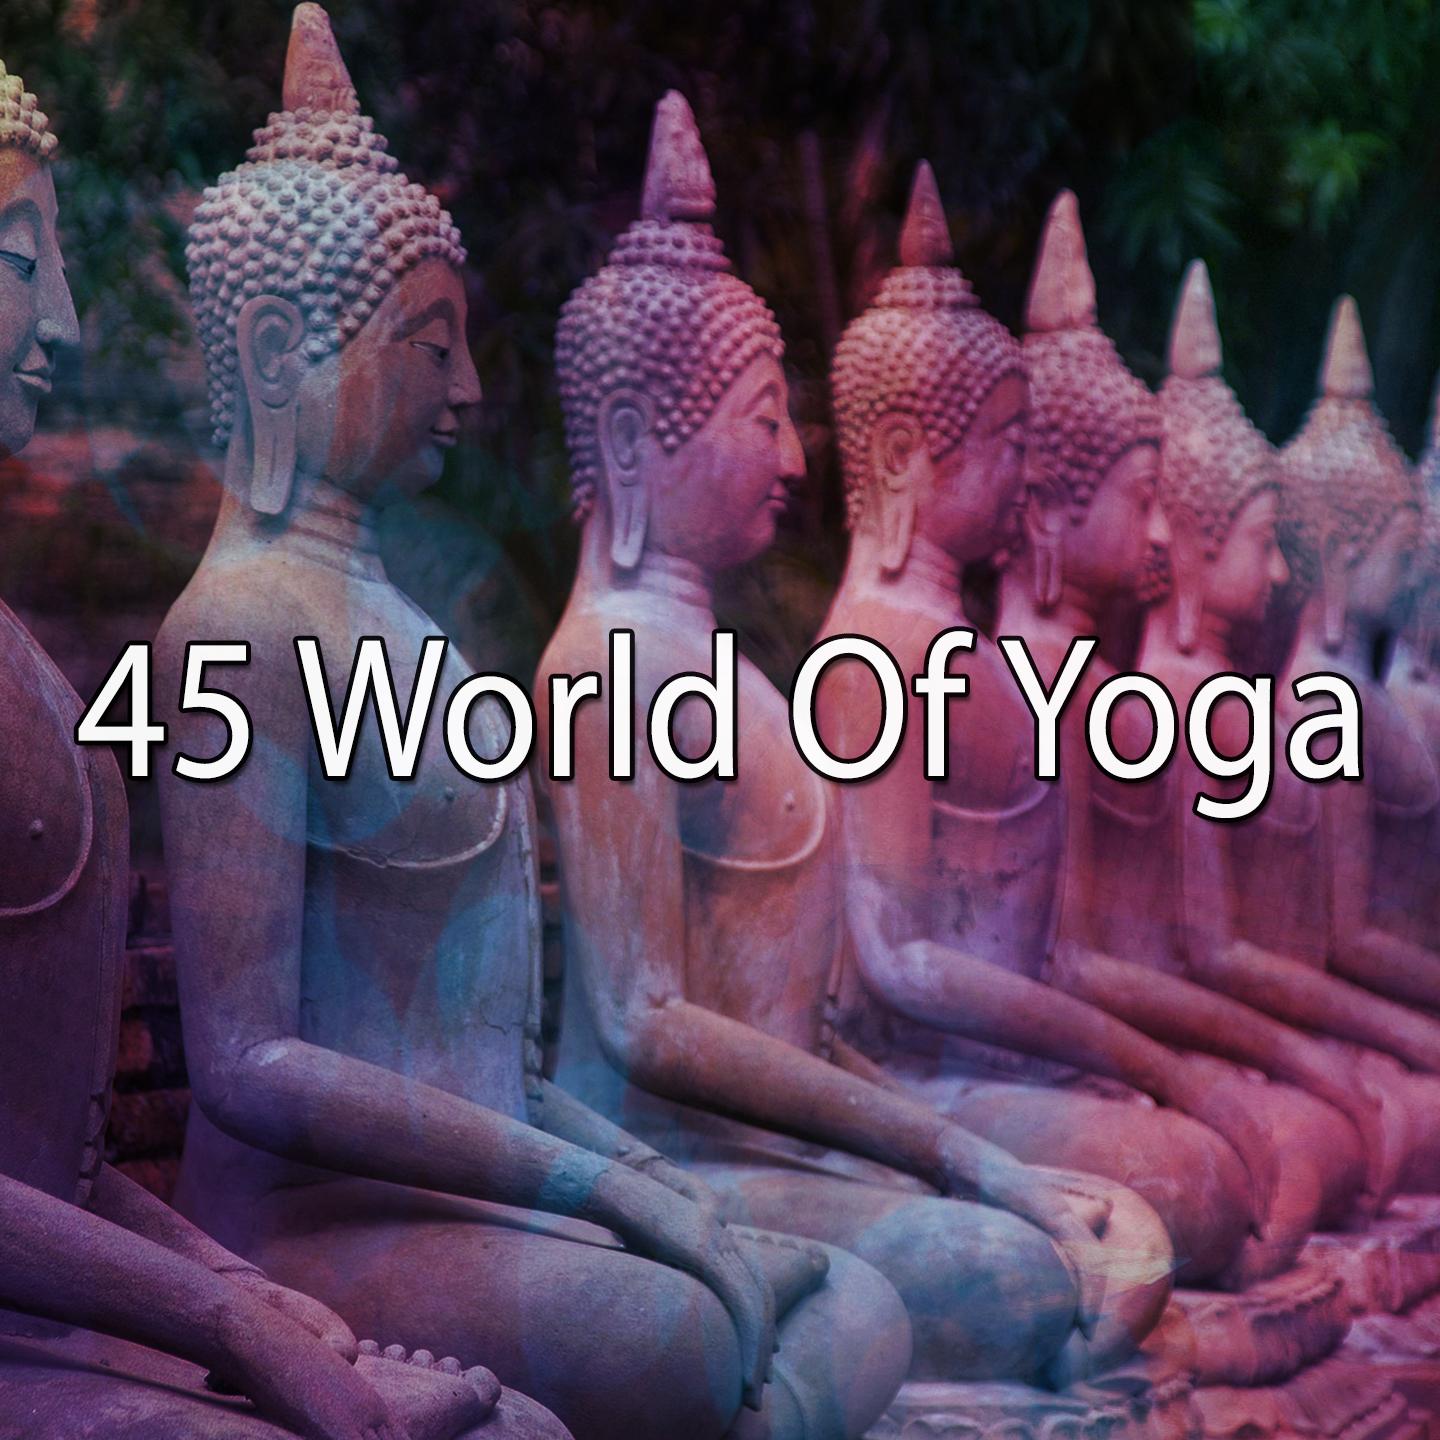 45 World of Yoga